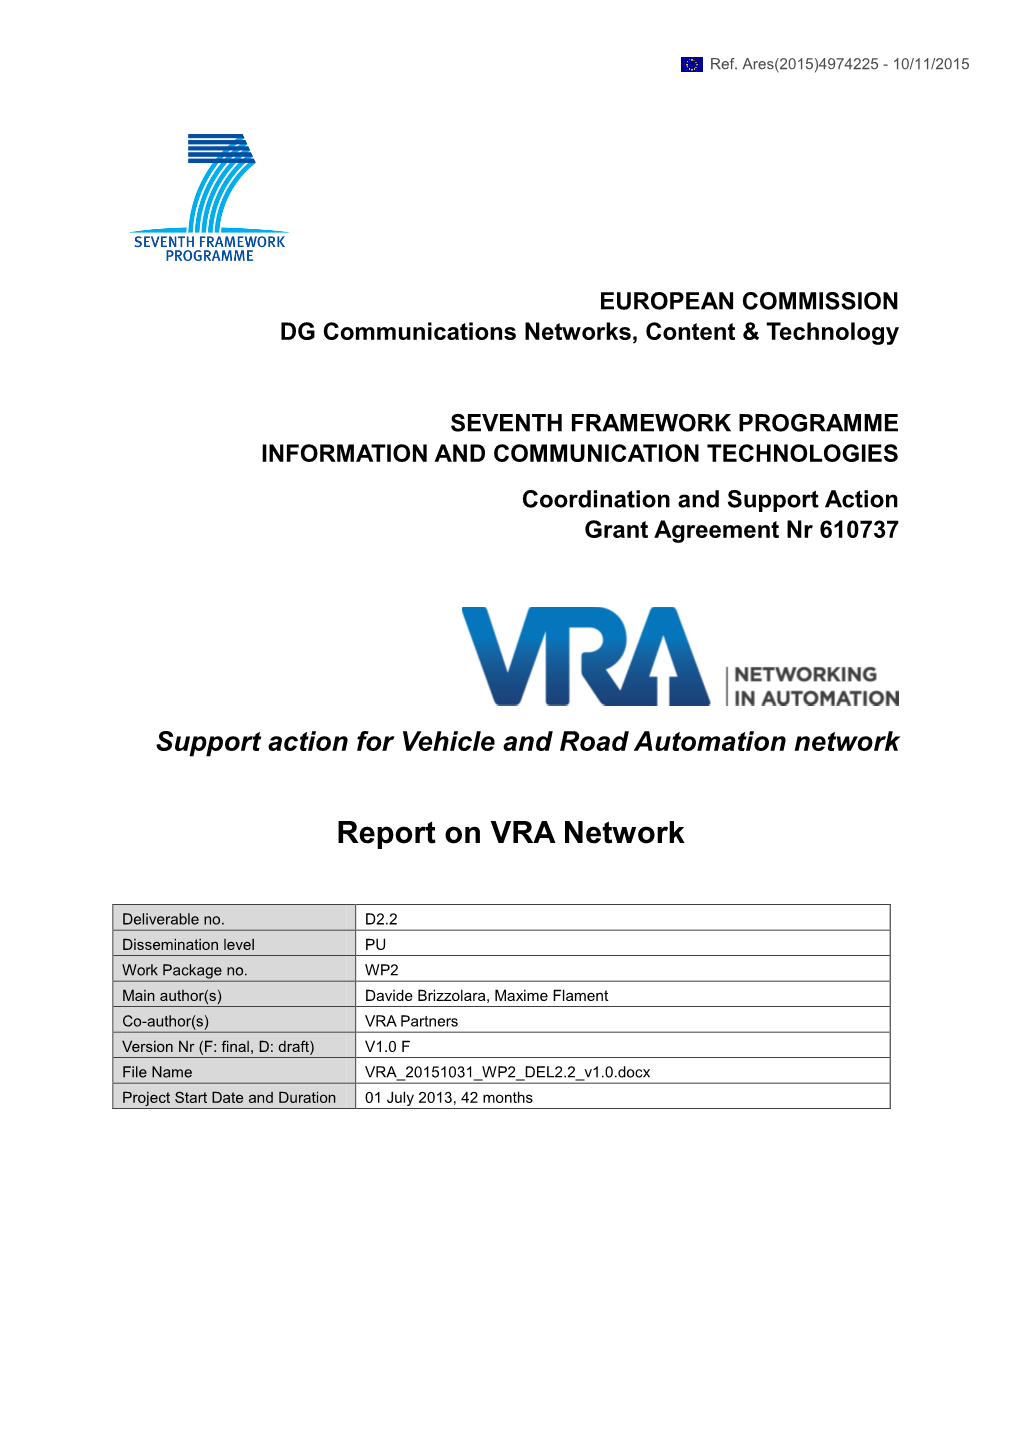 Report on VRA Network